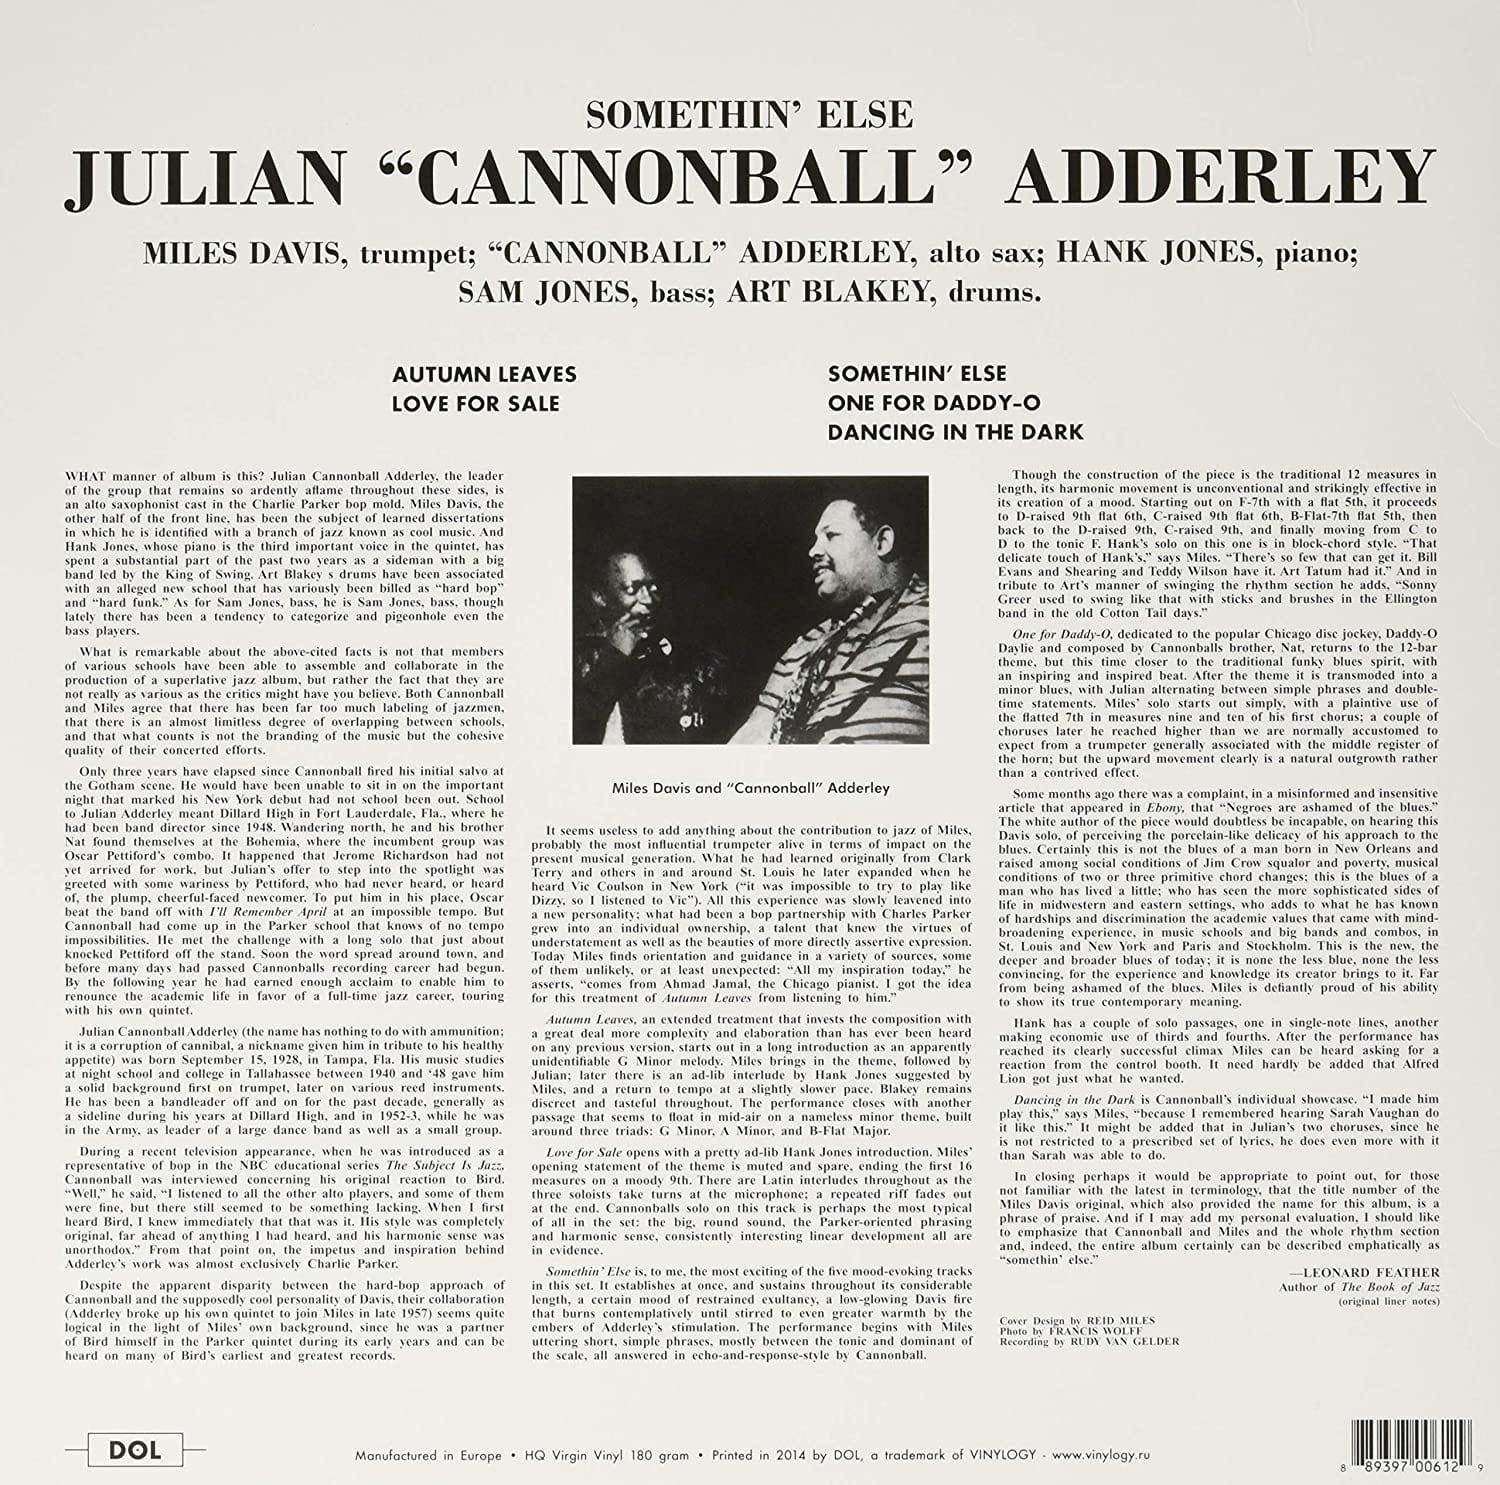 Cannonball Adderley - Somethin' Else (Limited Edition, 180 Gram, Blue Vinyl) (LP) - Joco Records